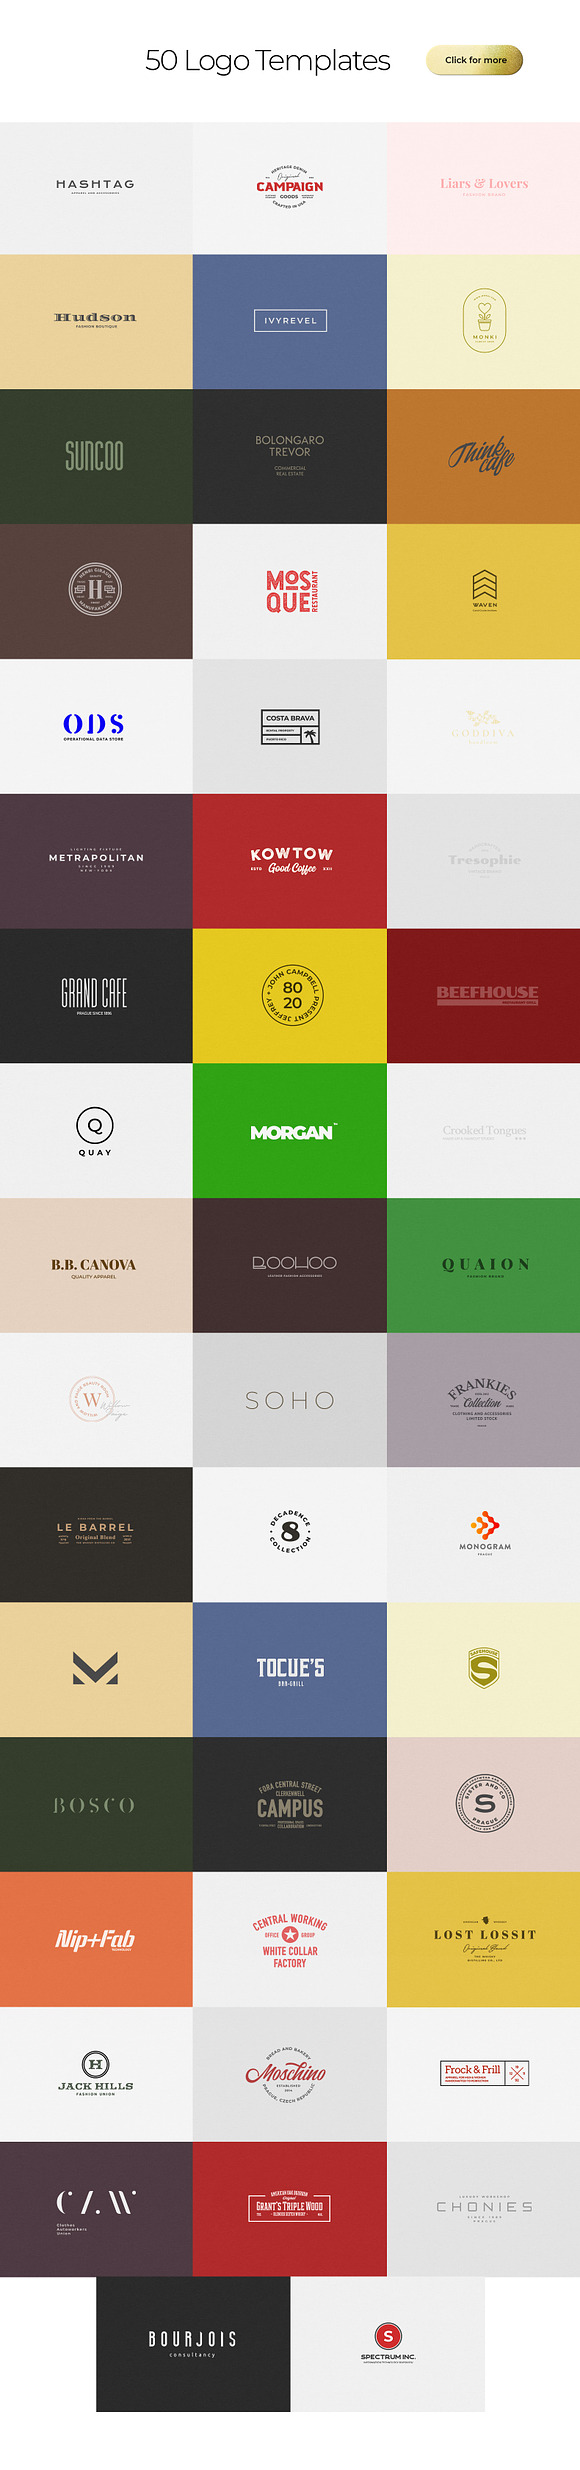 50 logo mockup branding bundle in Branding Mockups - product preview 52